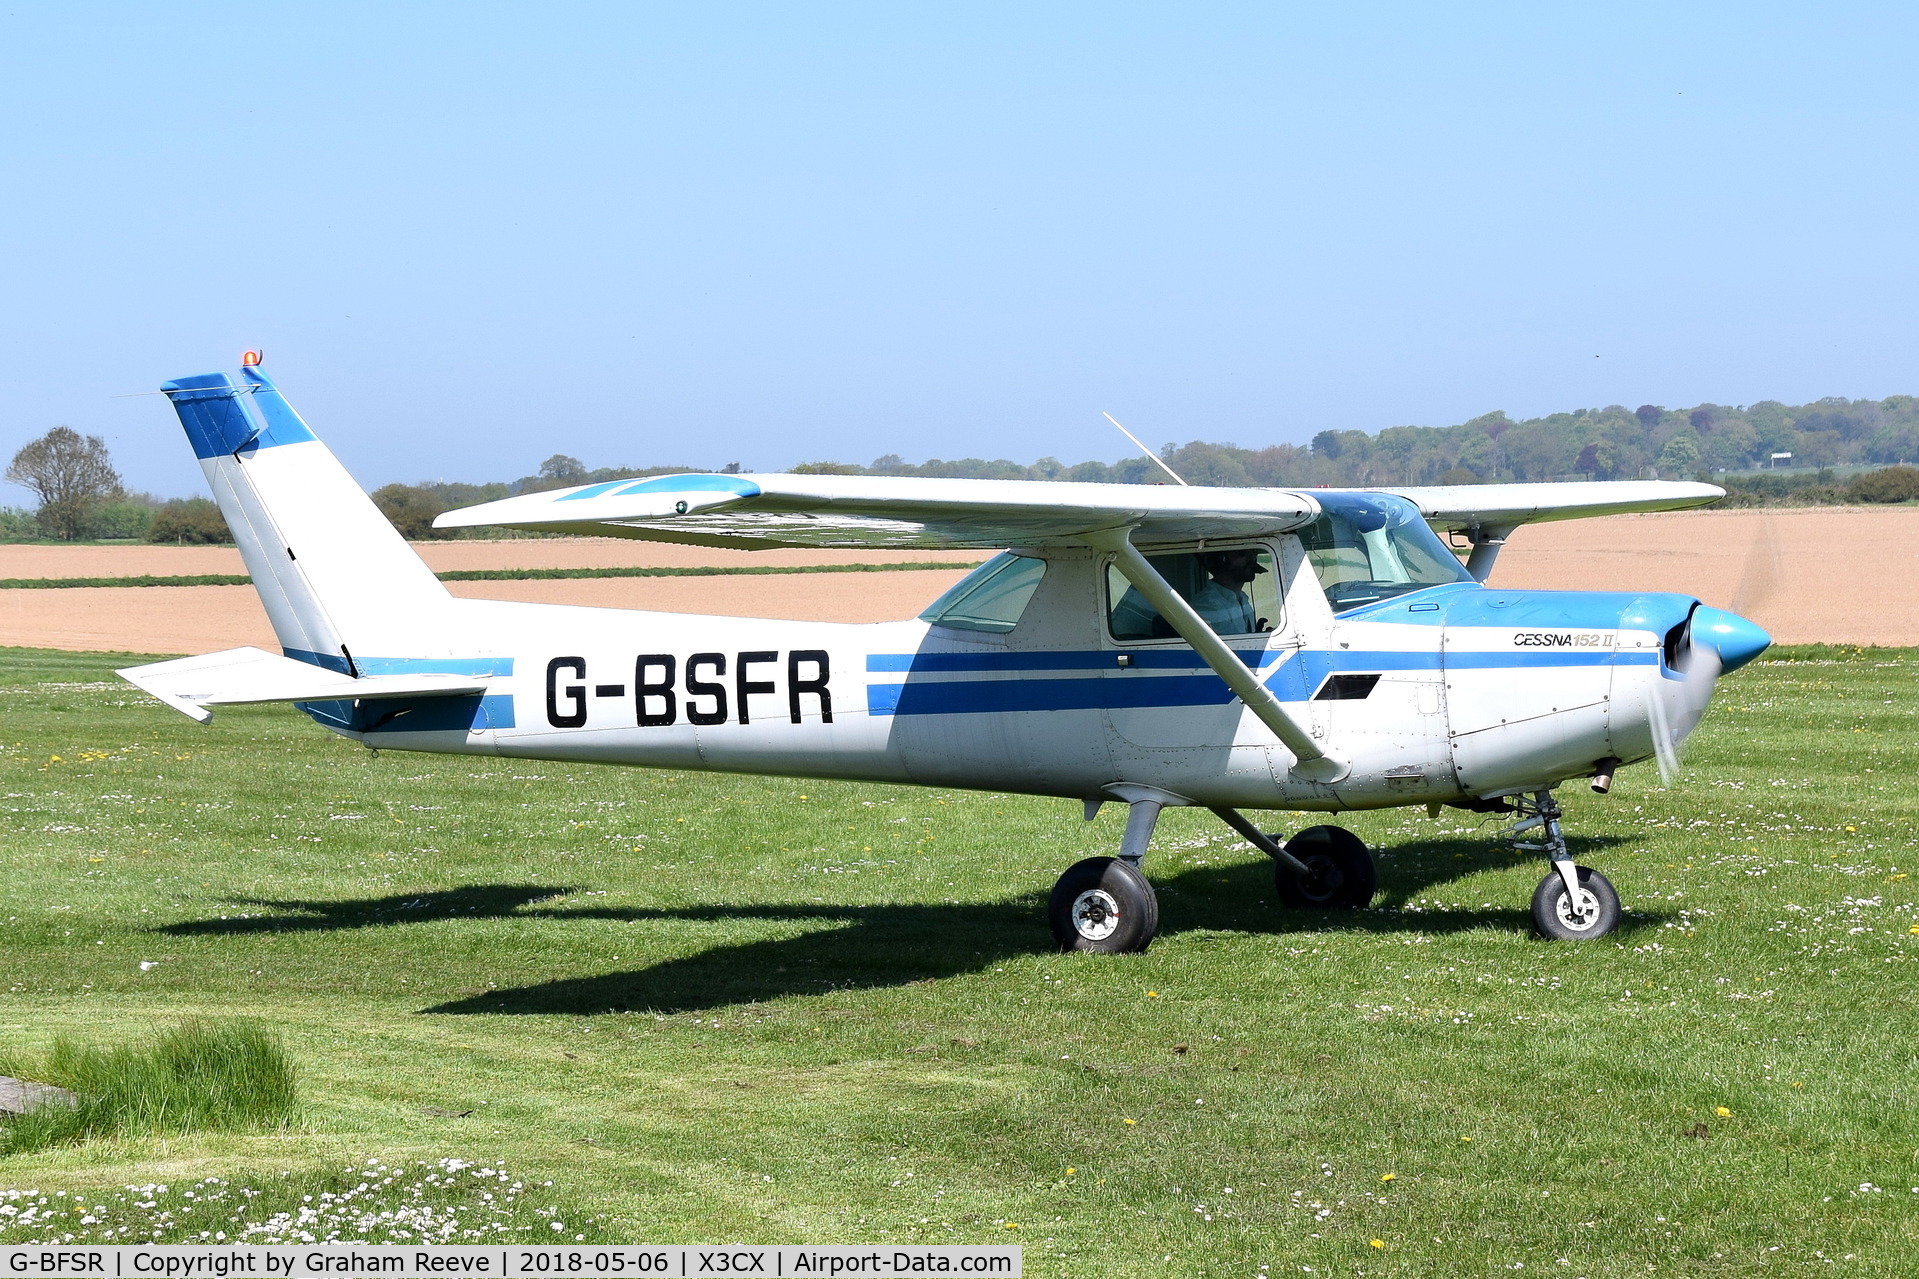 G-BFSR, 1969 Reims F150J C/N 0504, Just landed at Northrepps.